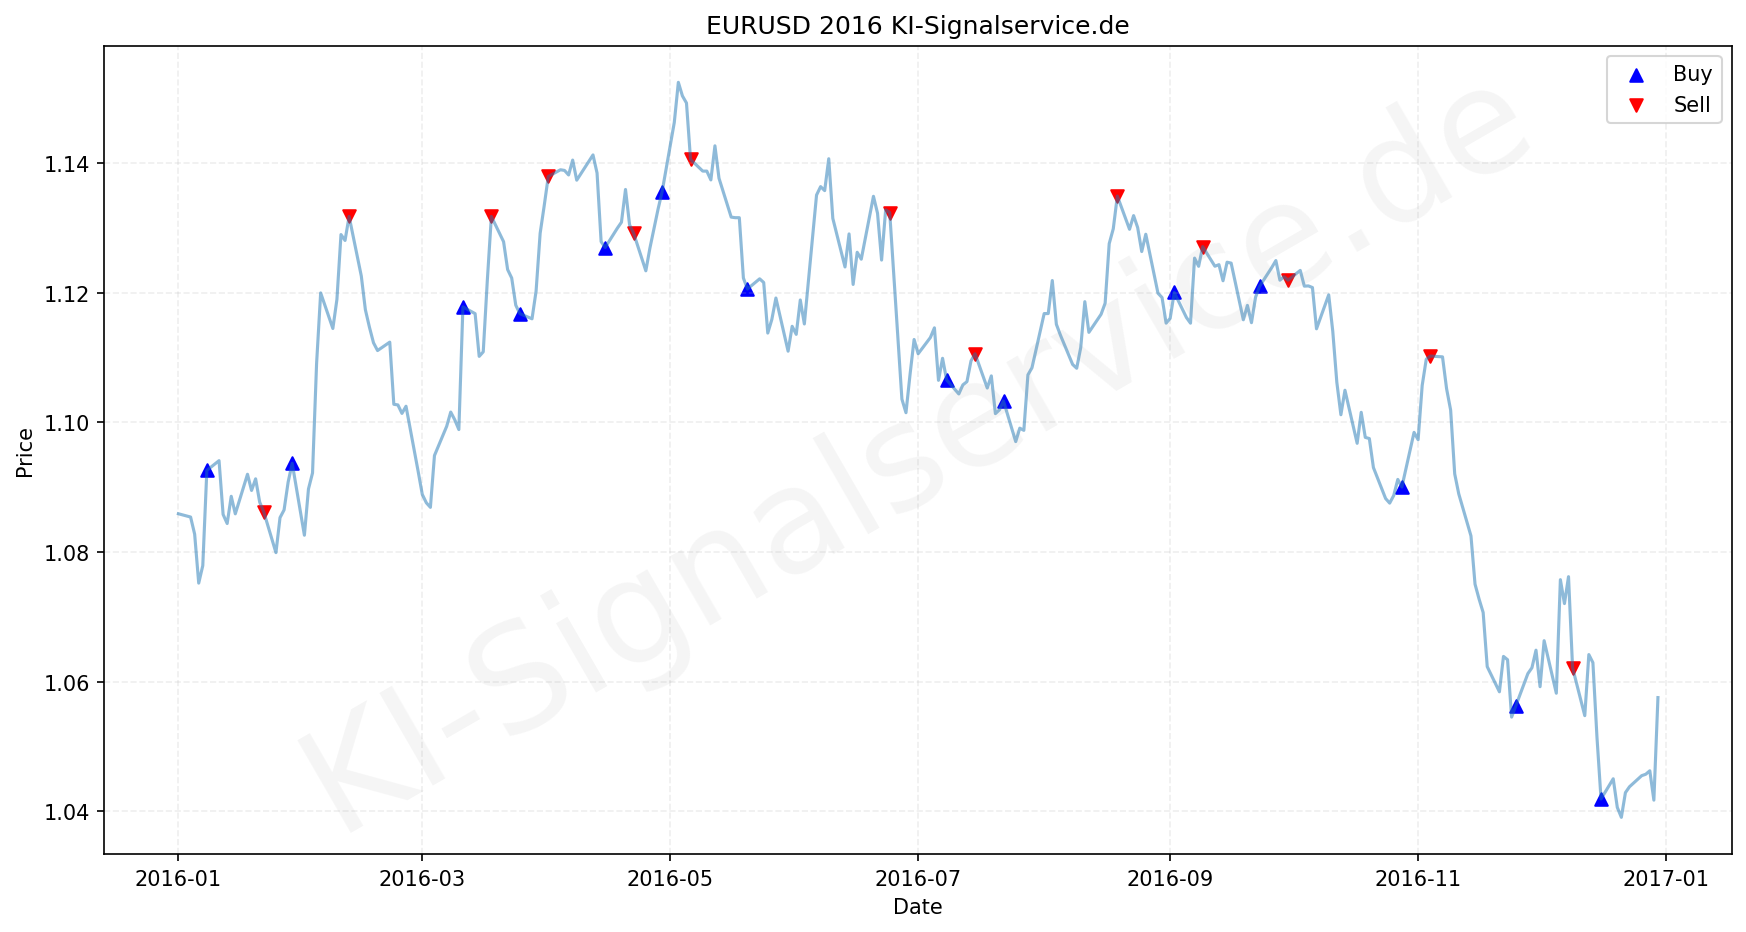 EURUSD Chart - KI Tradingsignale 2016